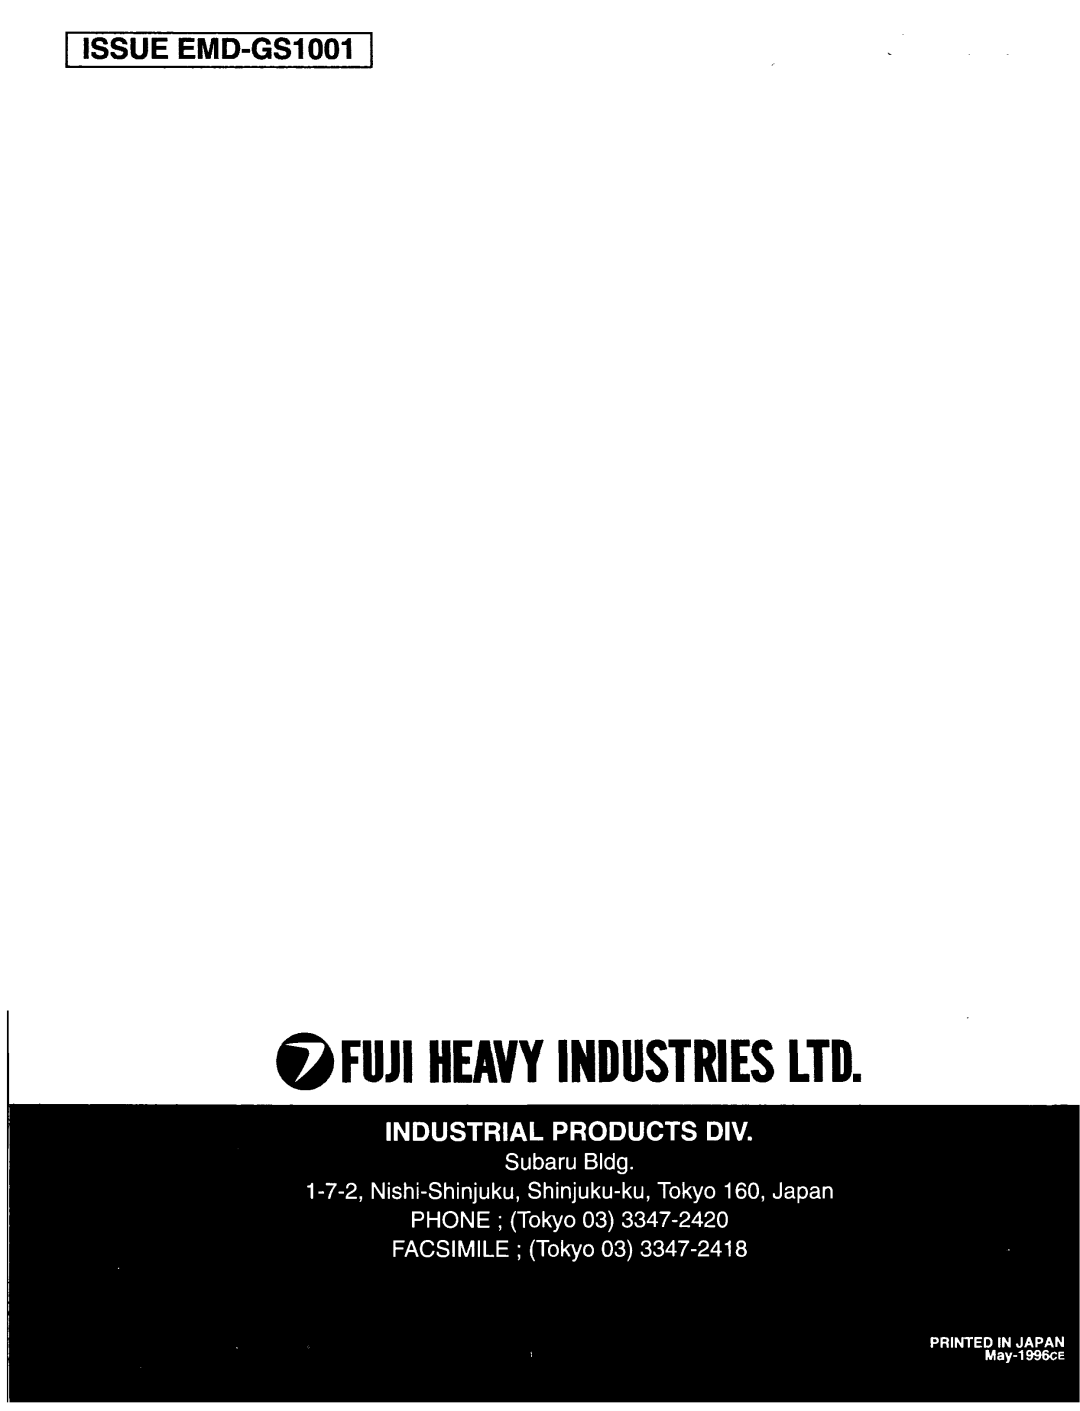 Subaru Robin Power Products RGX3510 manual @Fuji Heavy Industriesltd, I ISSUEEMD-GS1001 